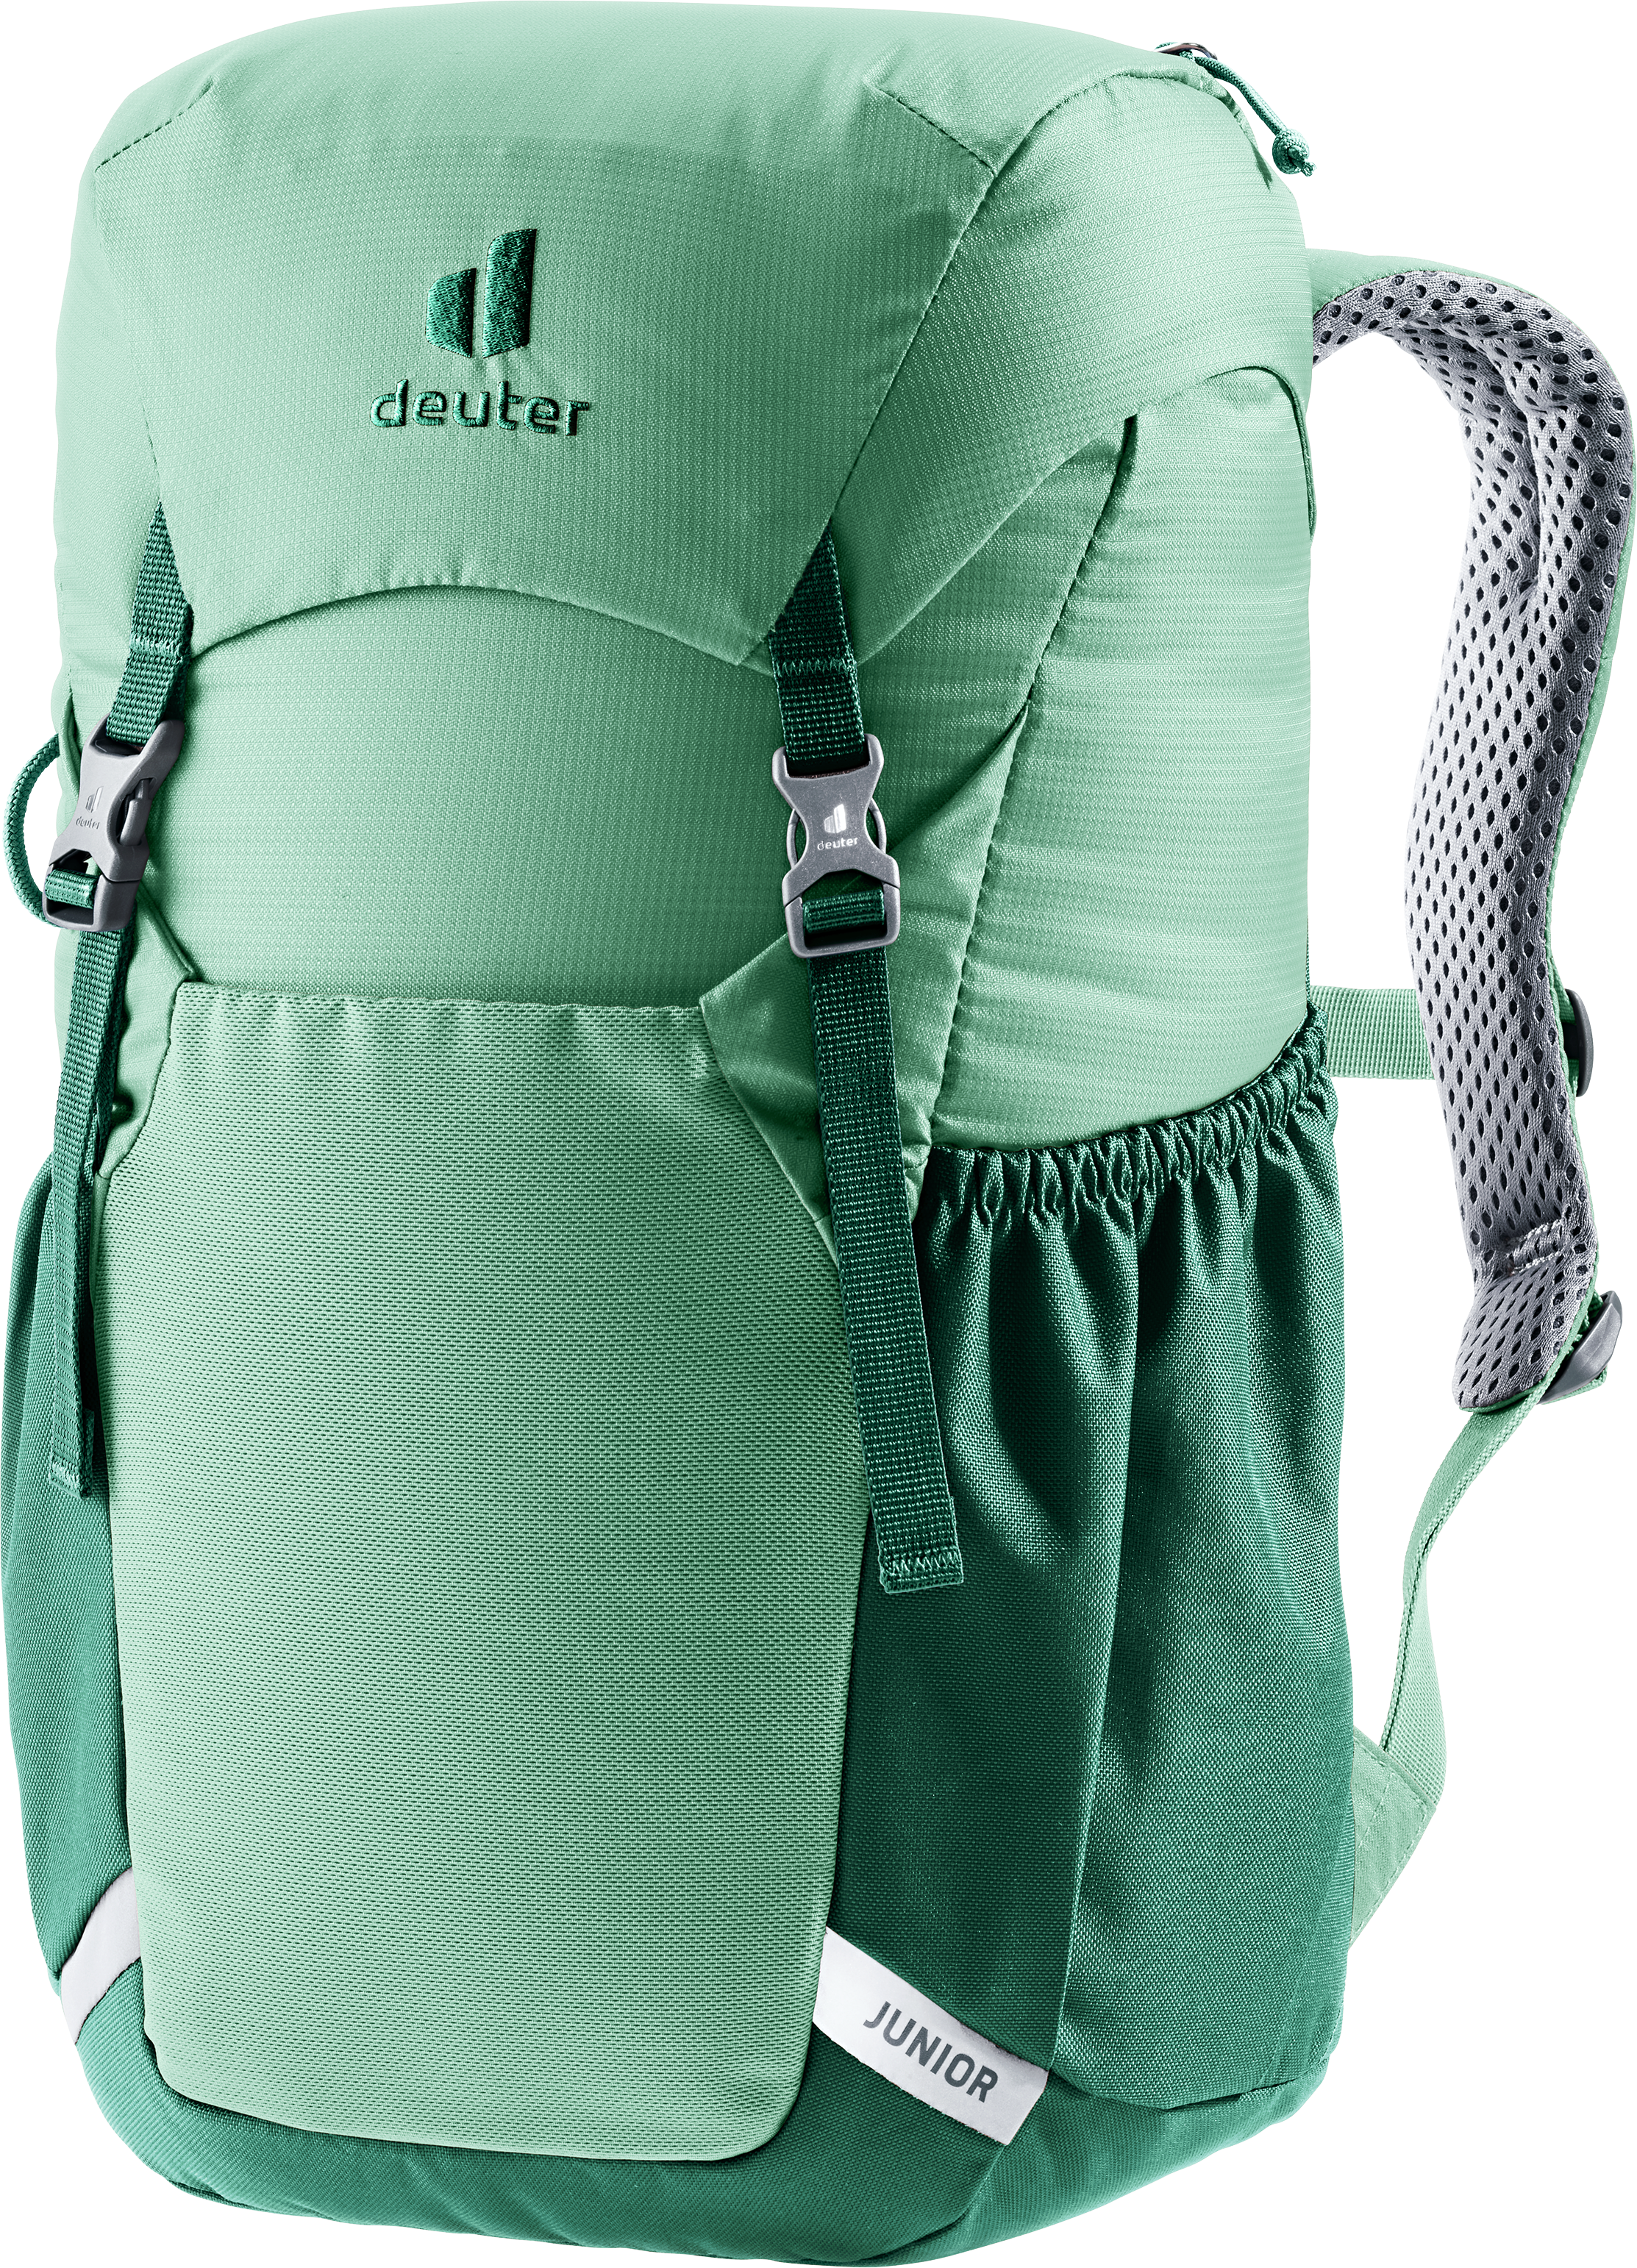 Deuter Junior Spearmint-Seagreen